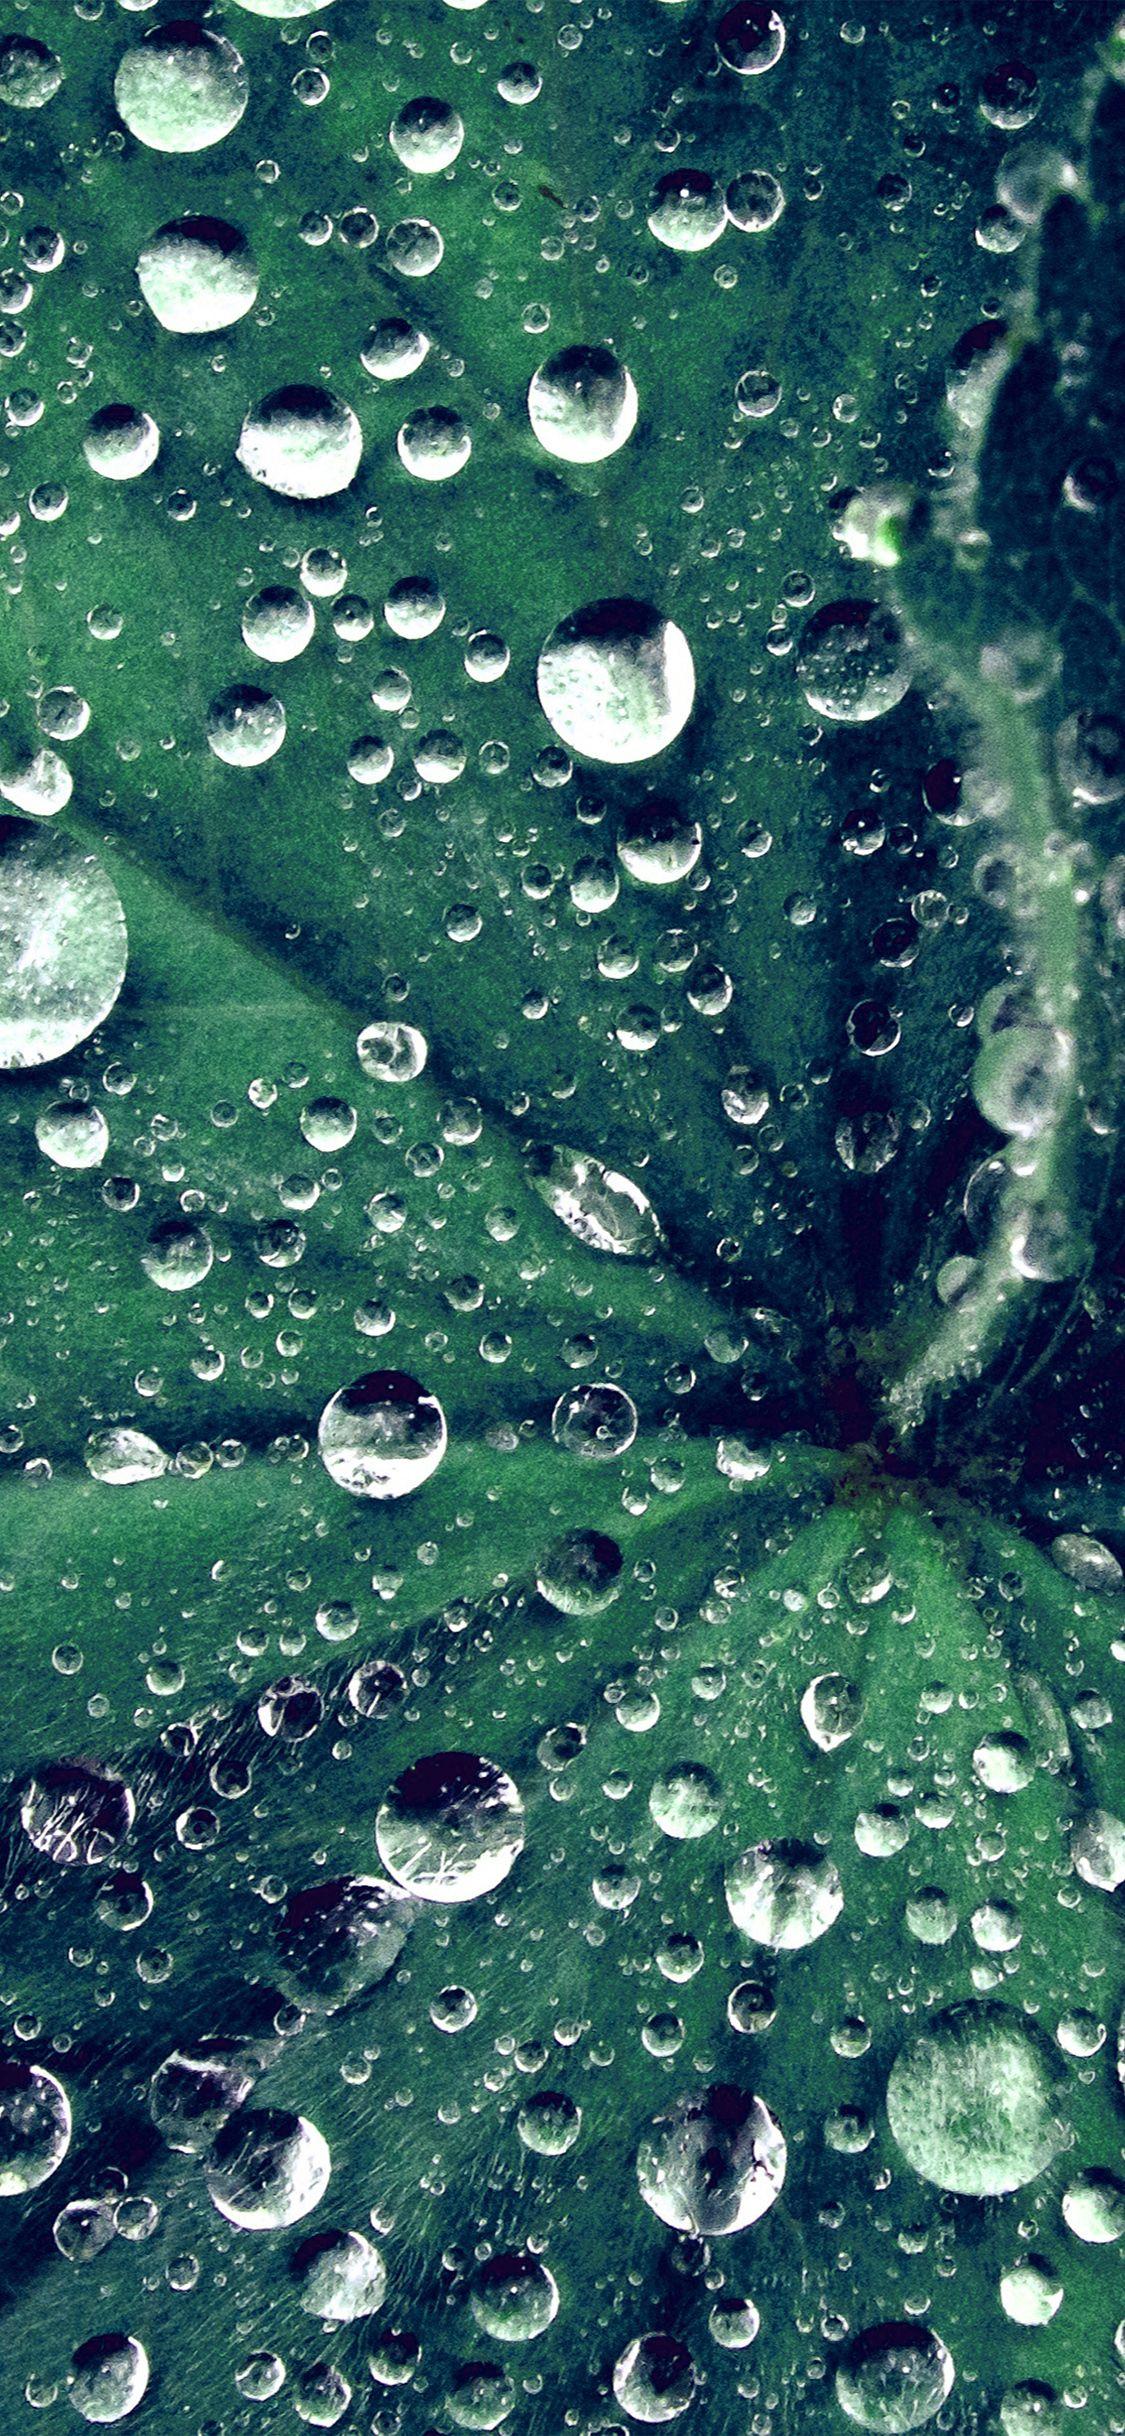 iPhone X wallpaper. water drop on leaf